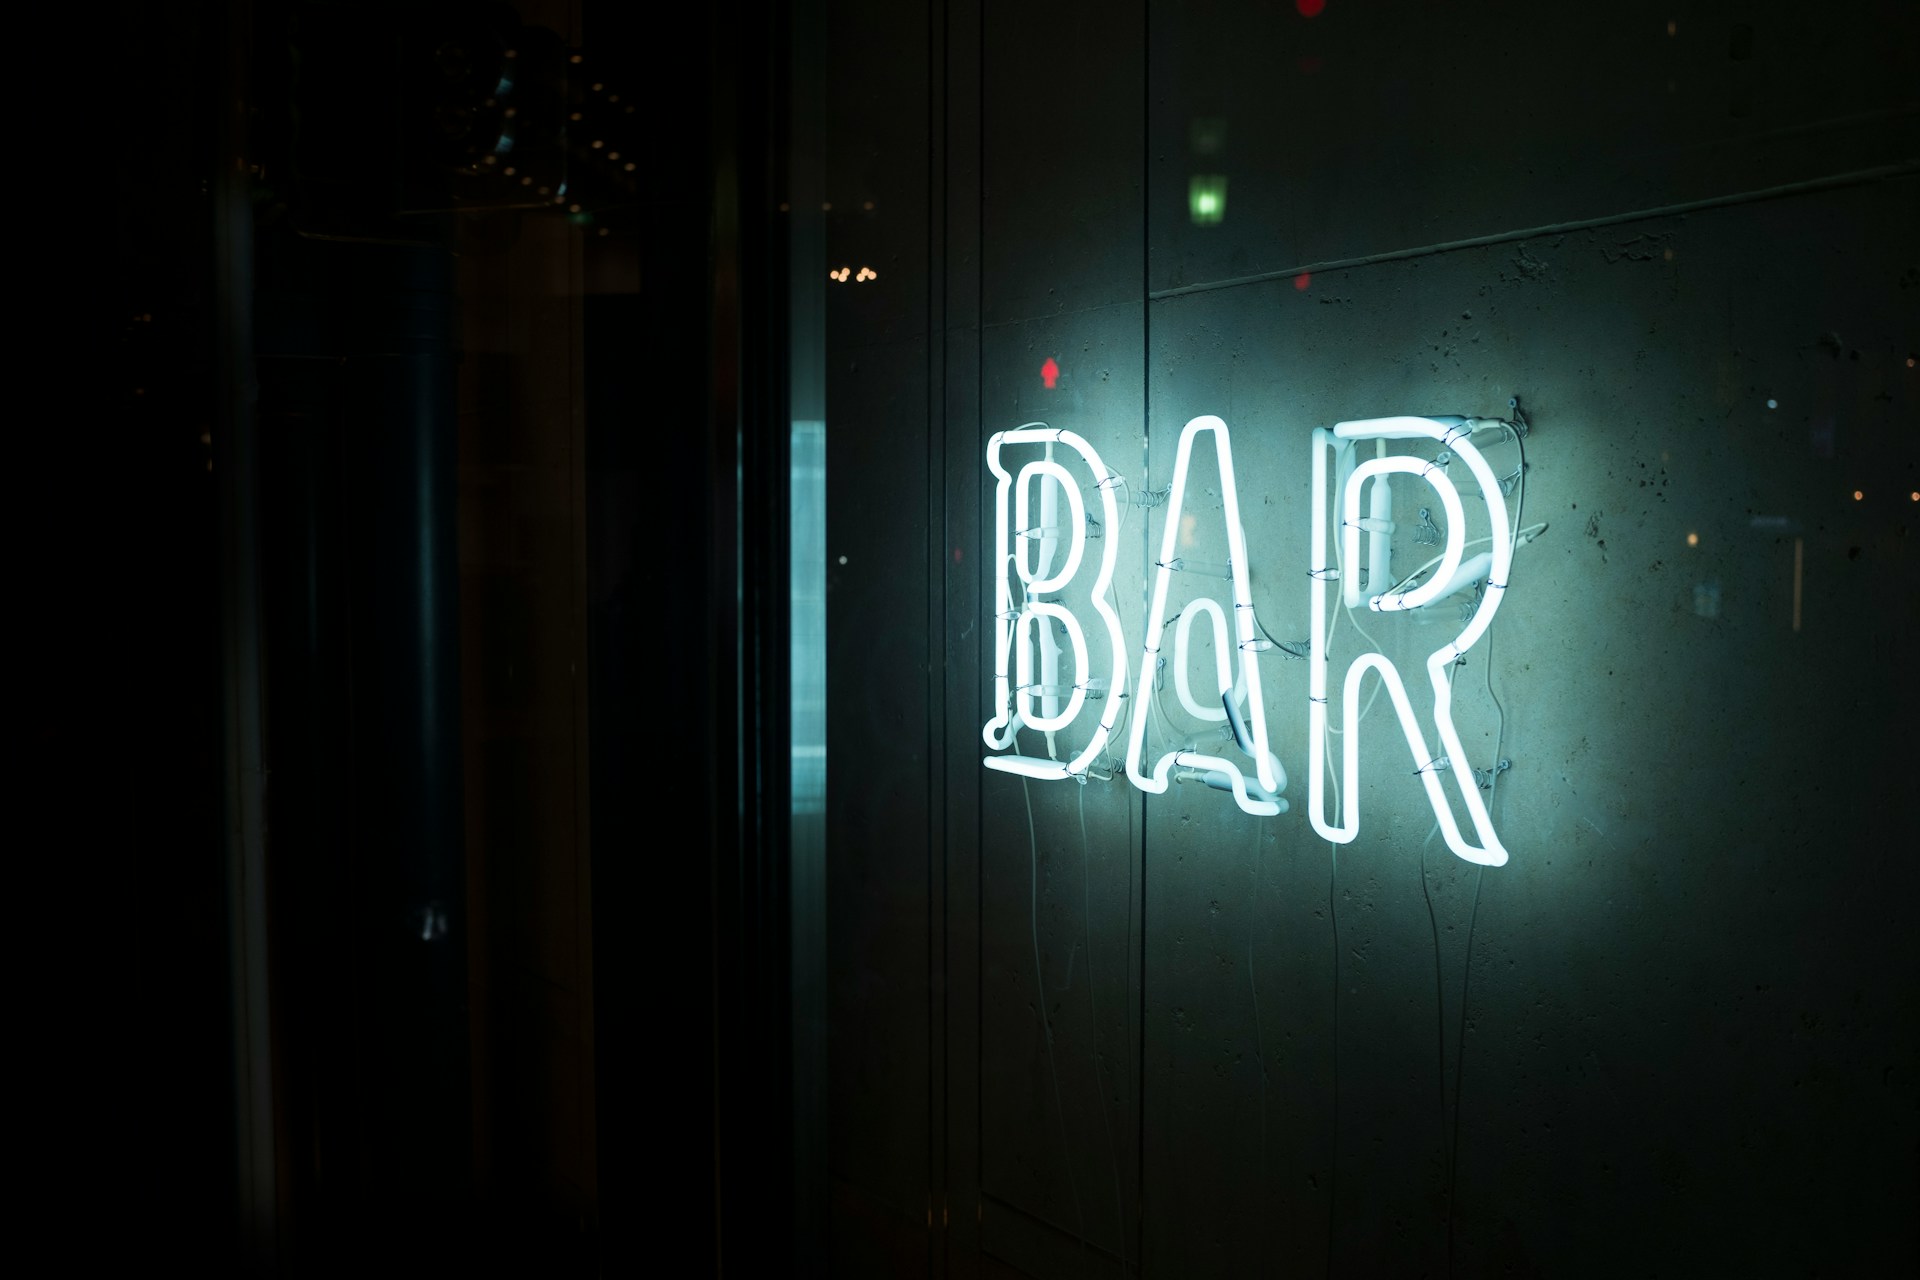 River's Bar